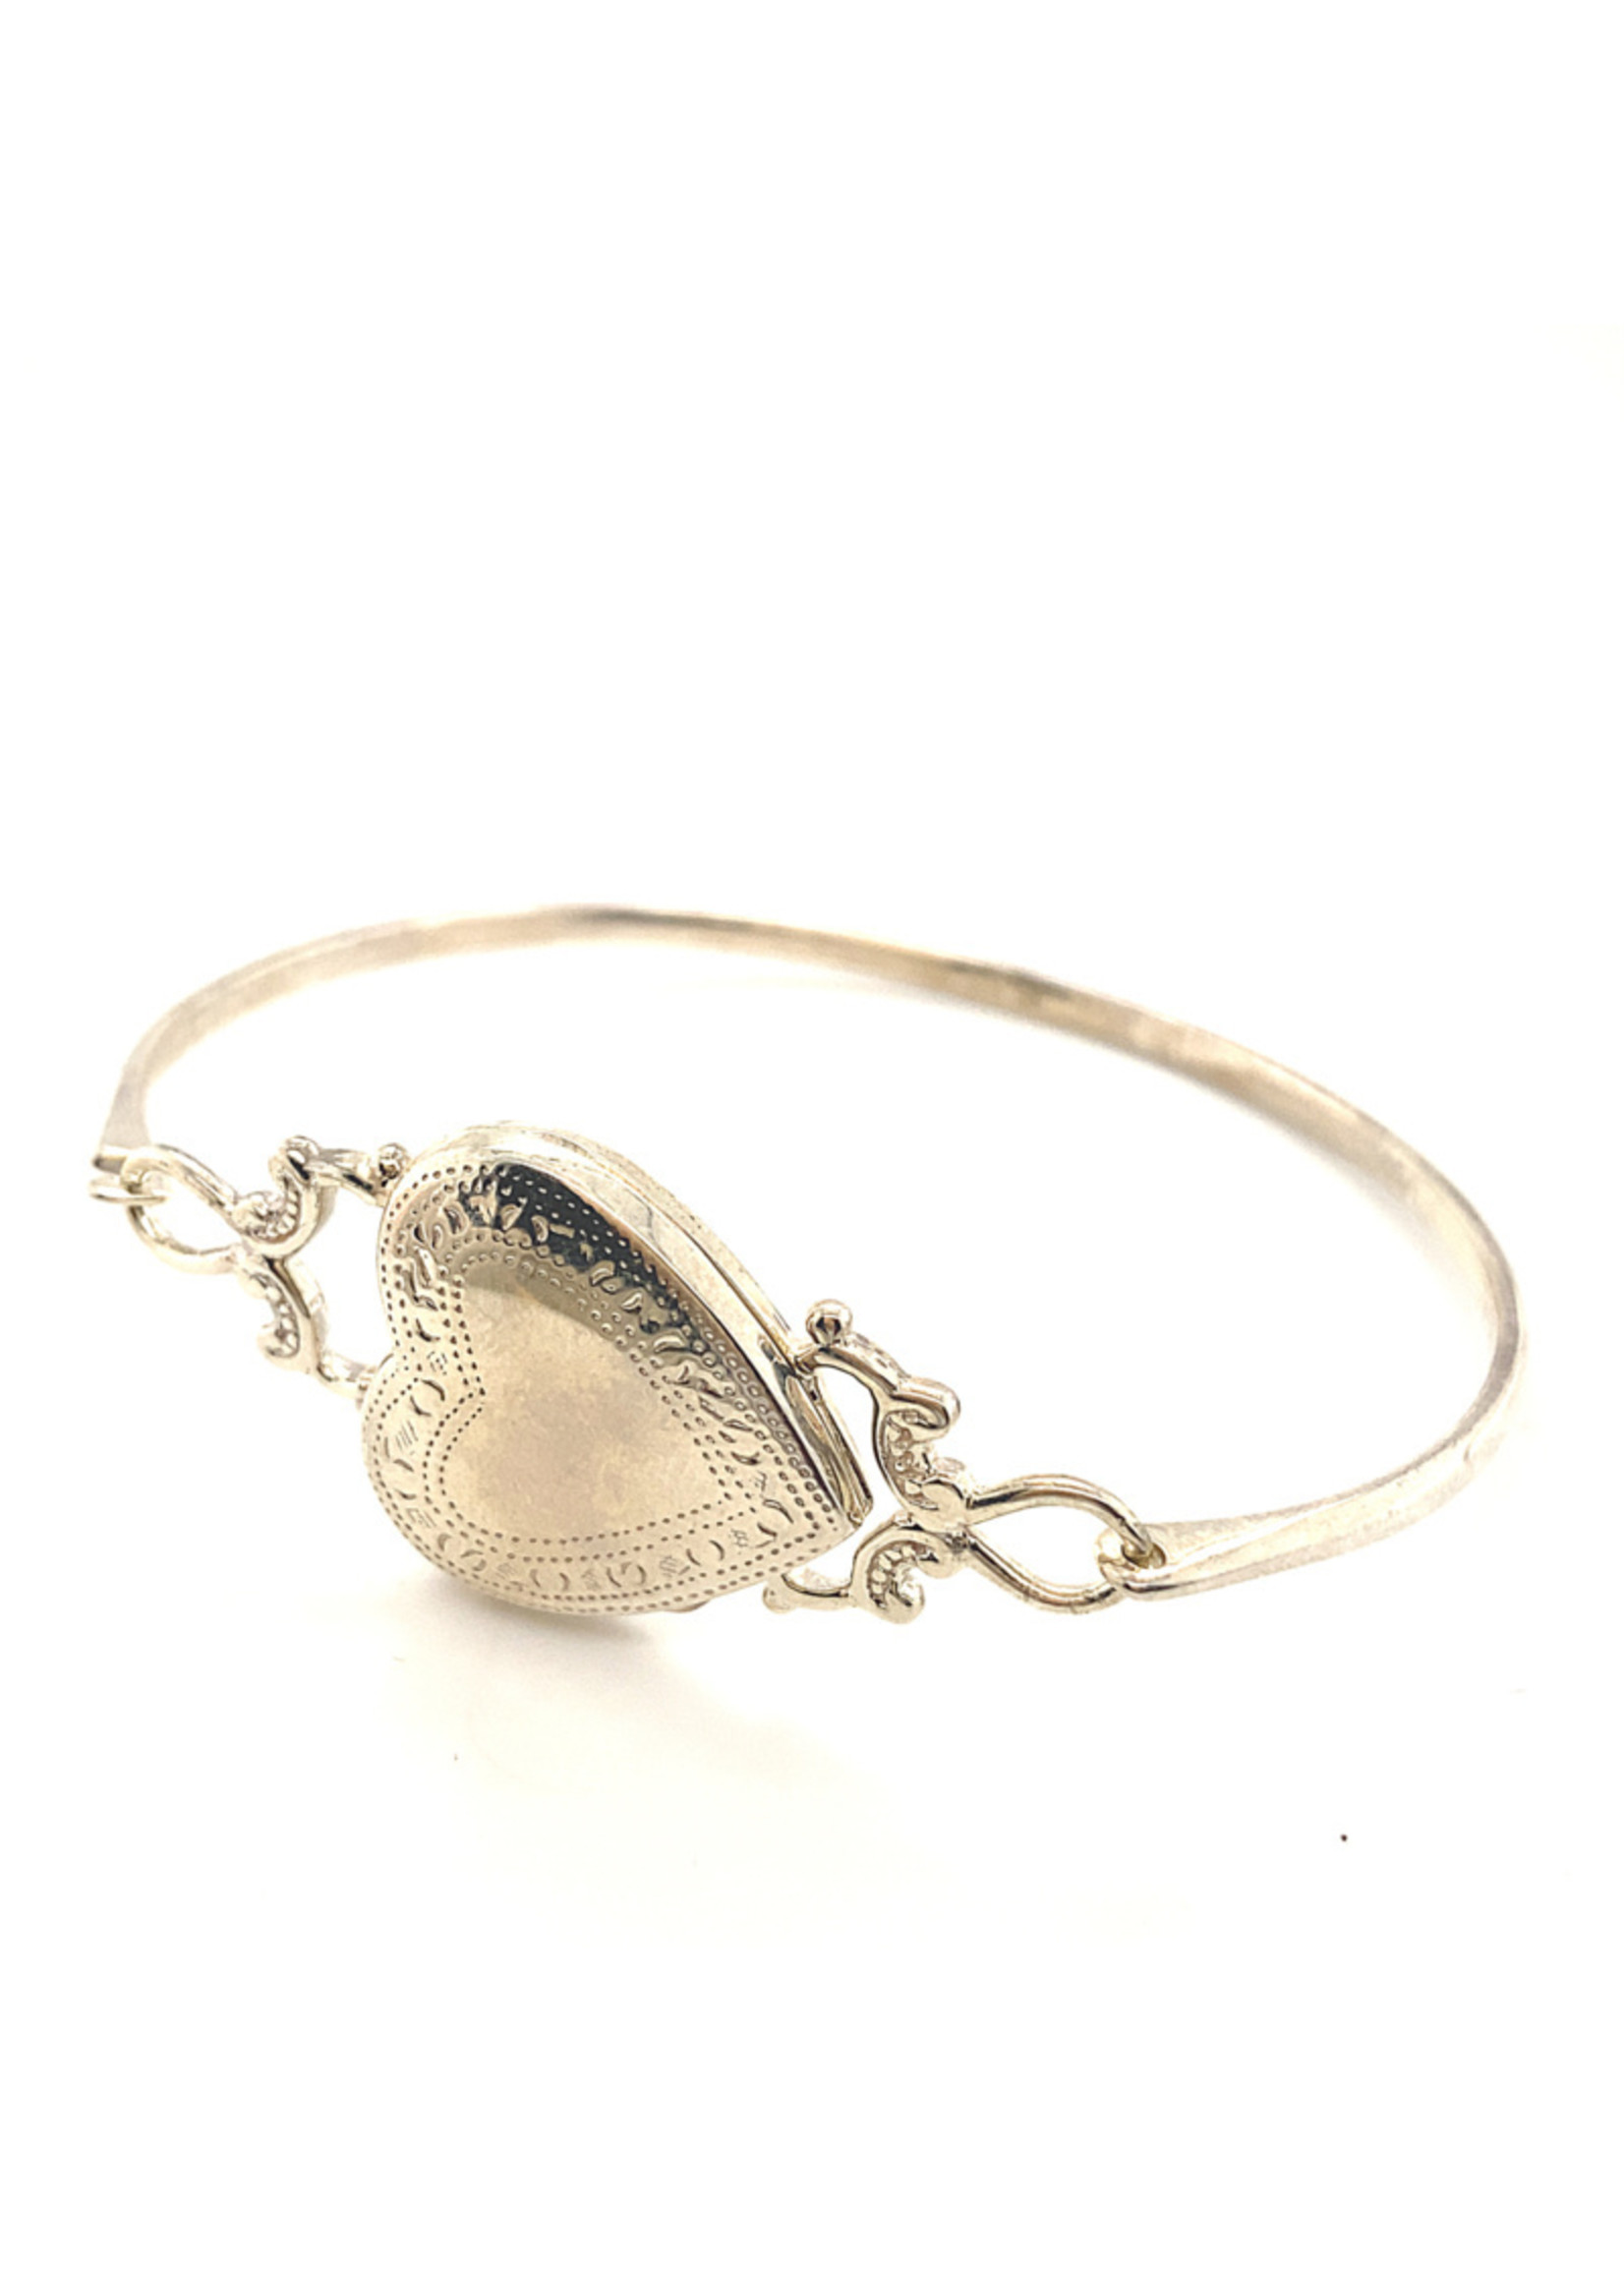 Vintage & Occasion Occasion zilveren bangle met een hartvormig medaillon